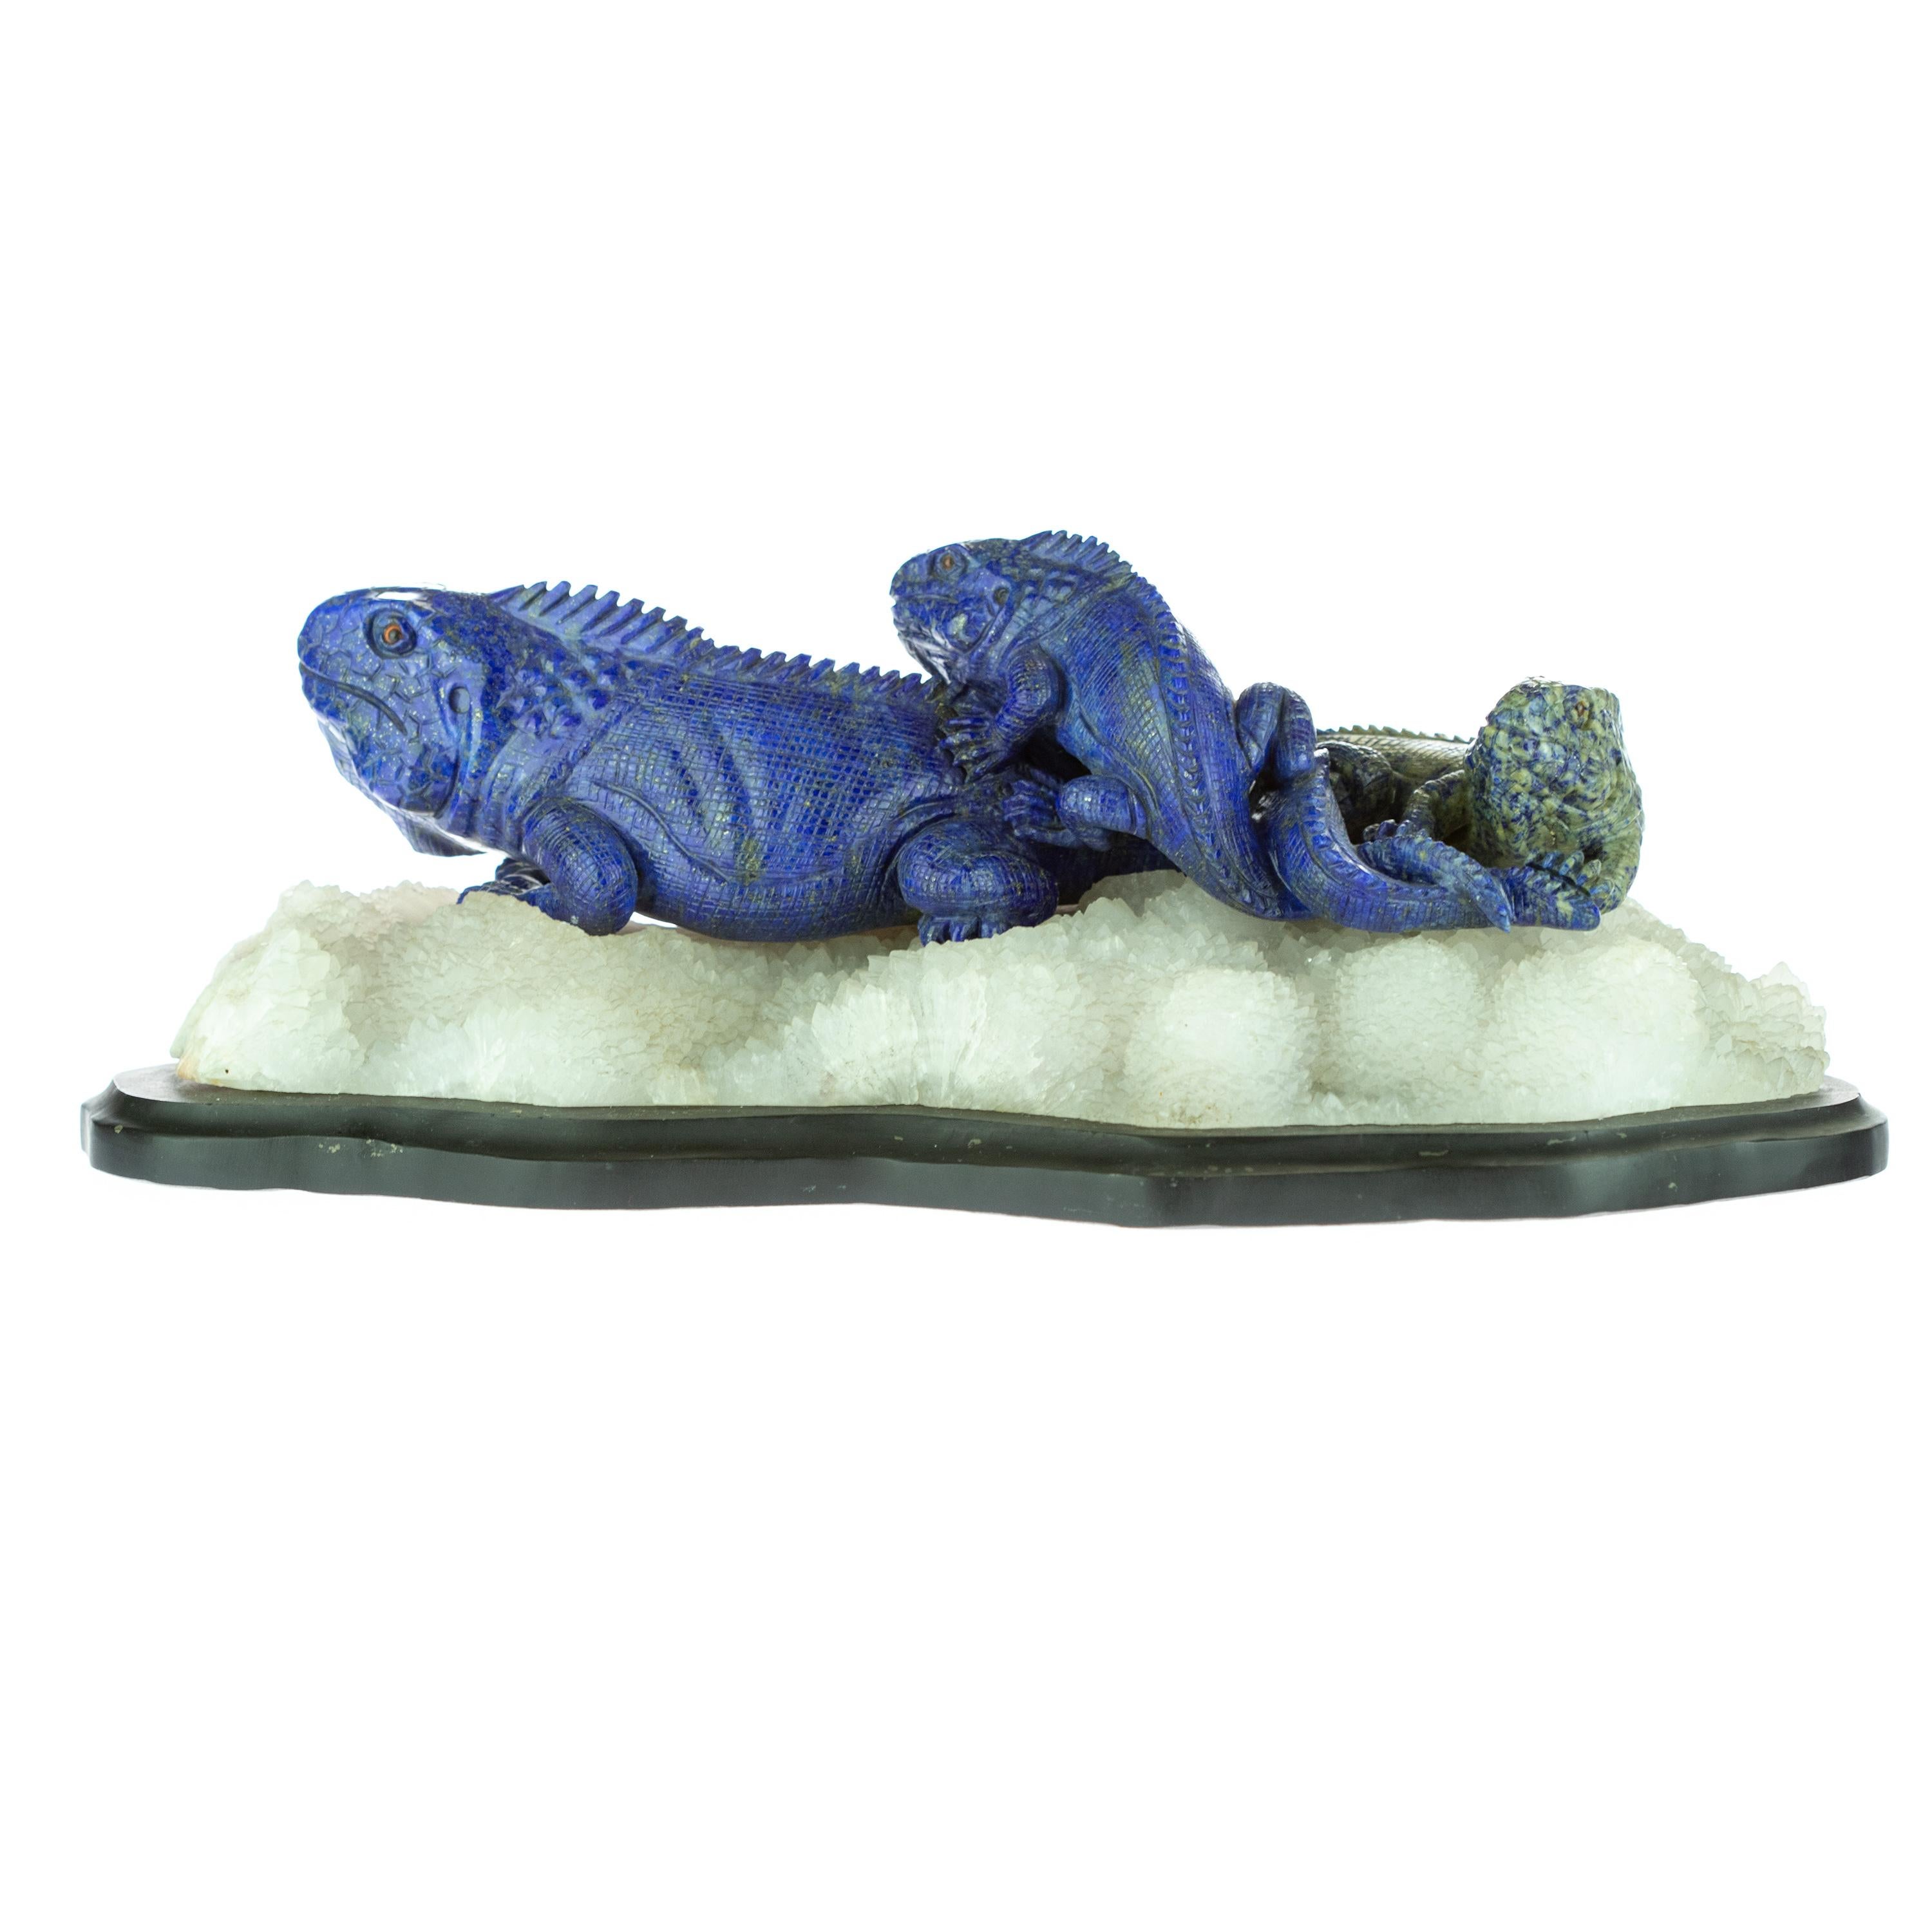 Hong Kong Lapis Lazuli Blue Lizards Figurine Carved Animal Artisanal Statue Sculpture For Sale